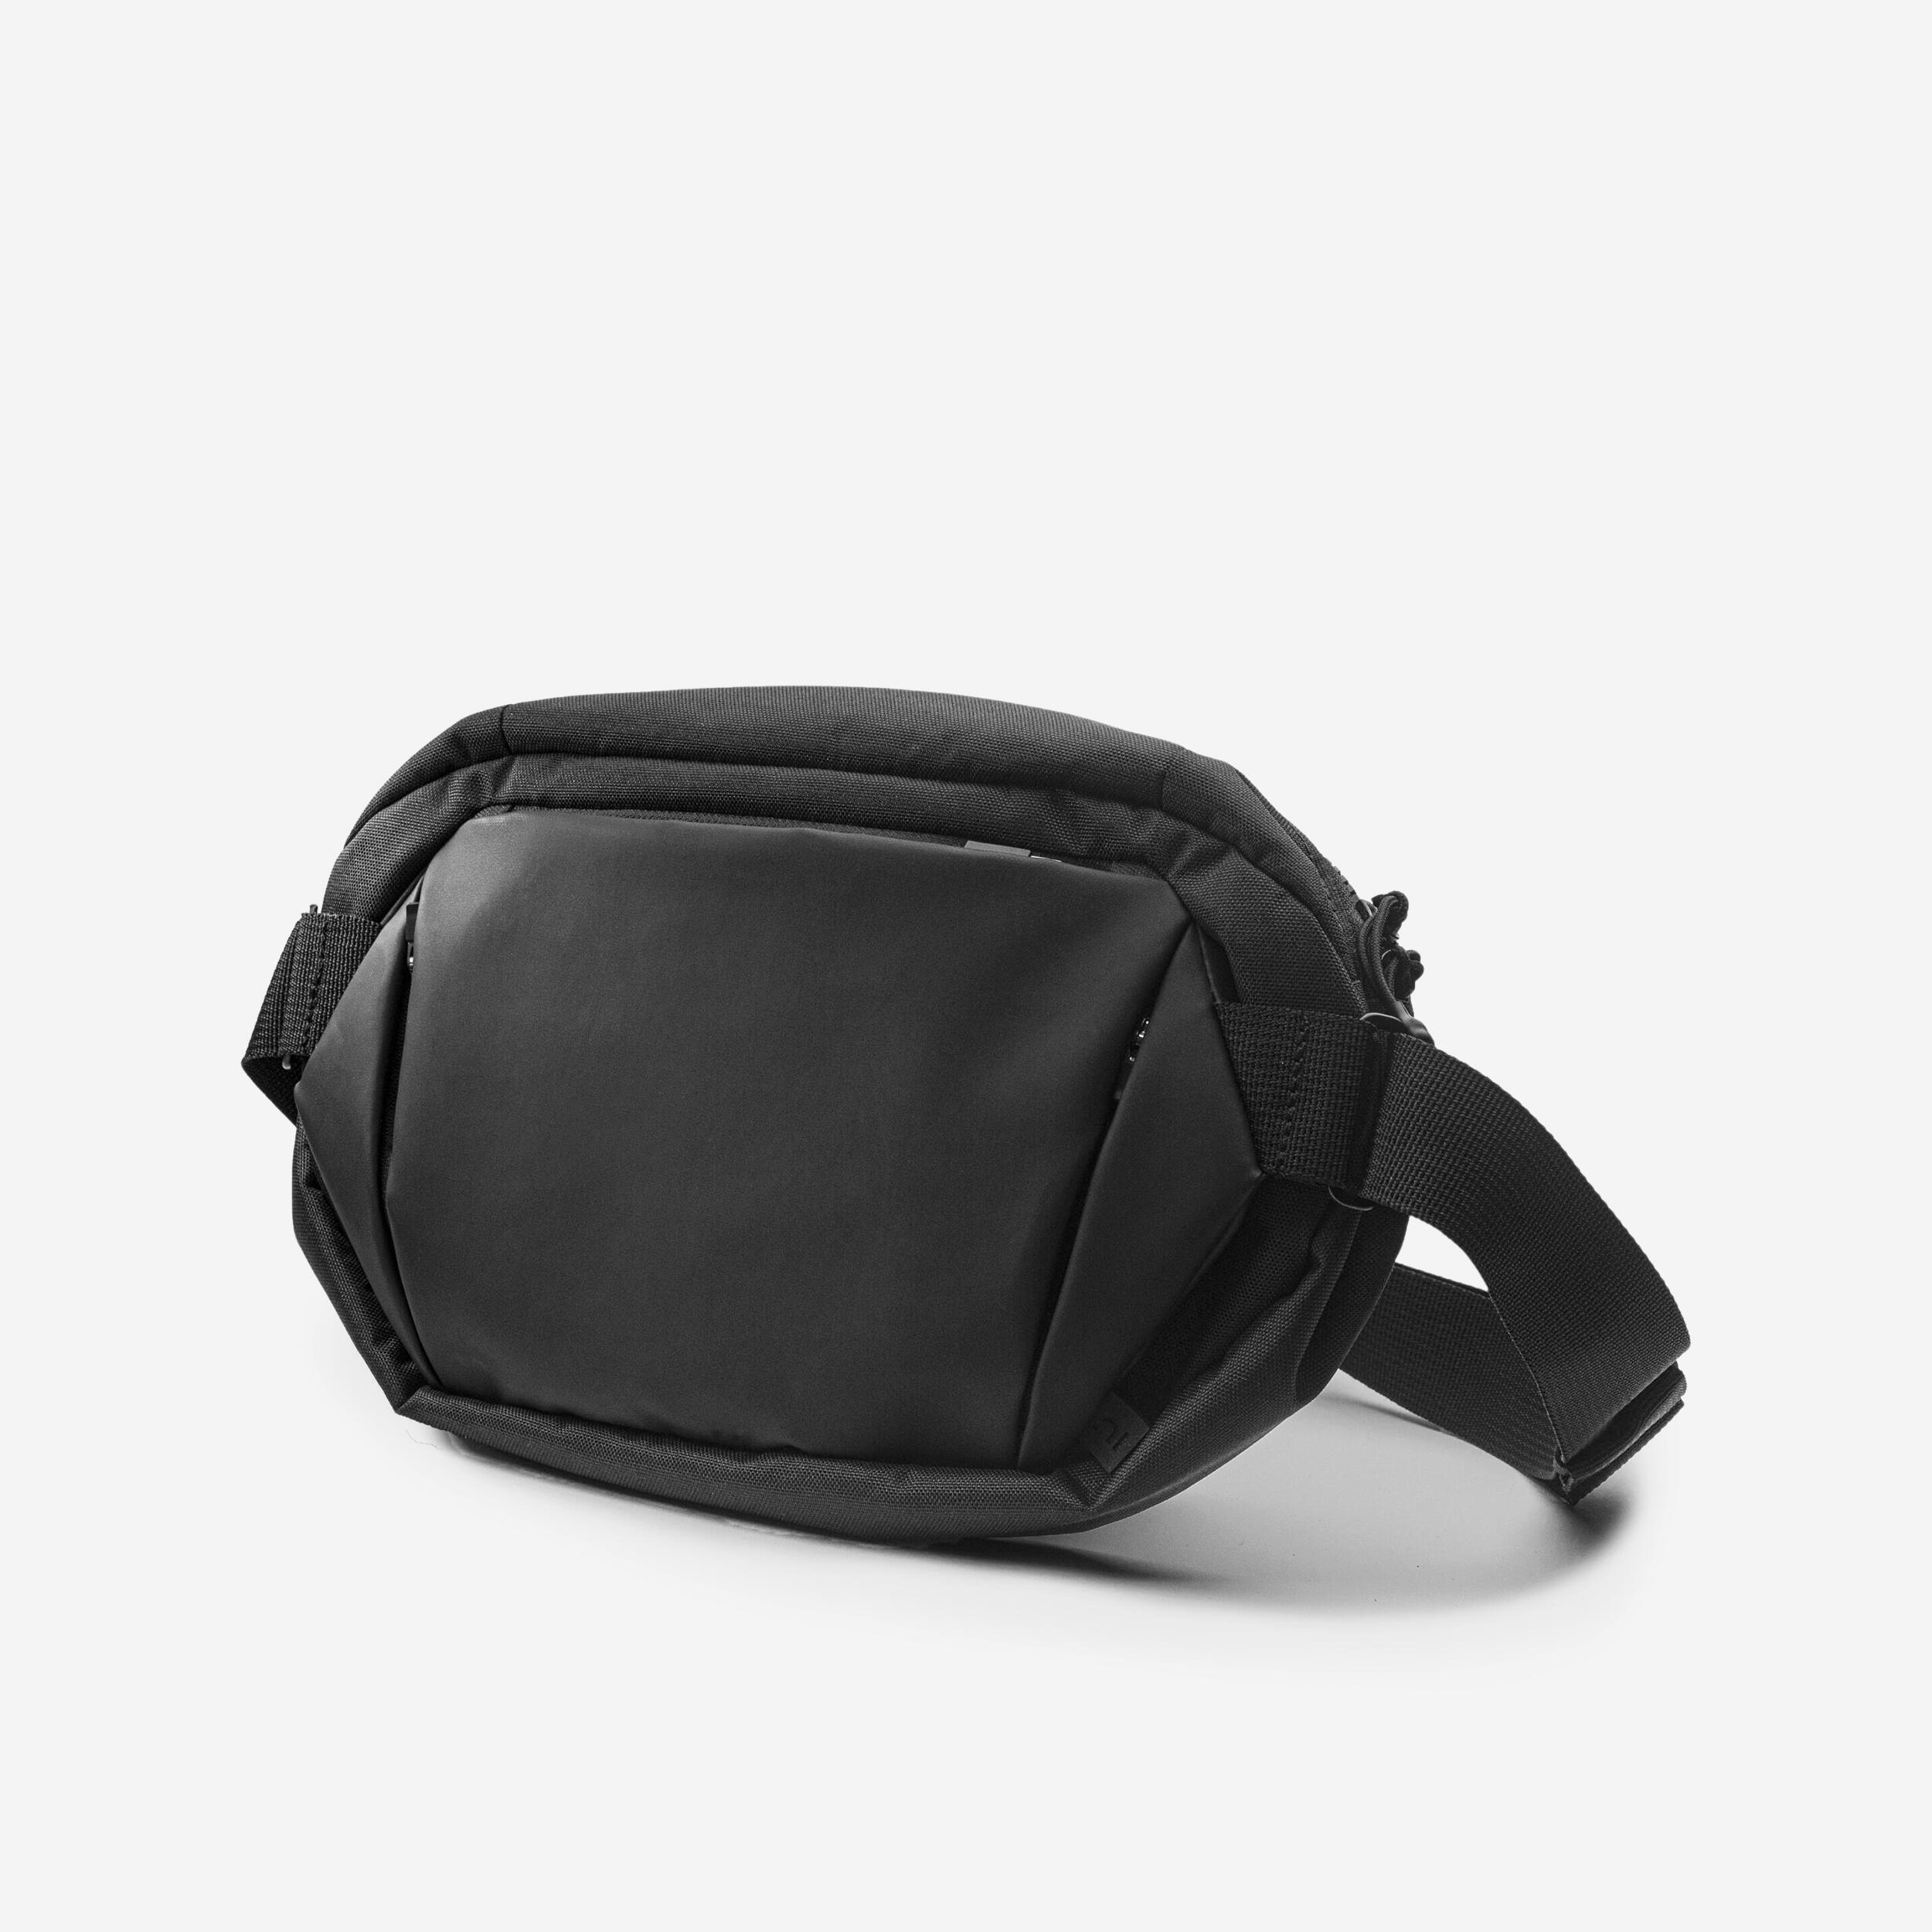 Decathlon Forclaz Compact 2in1 tote bag - TRAVEL 15L - black | Lazada PH